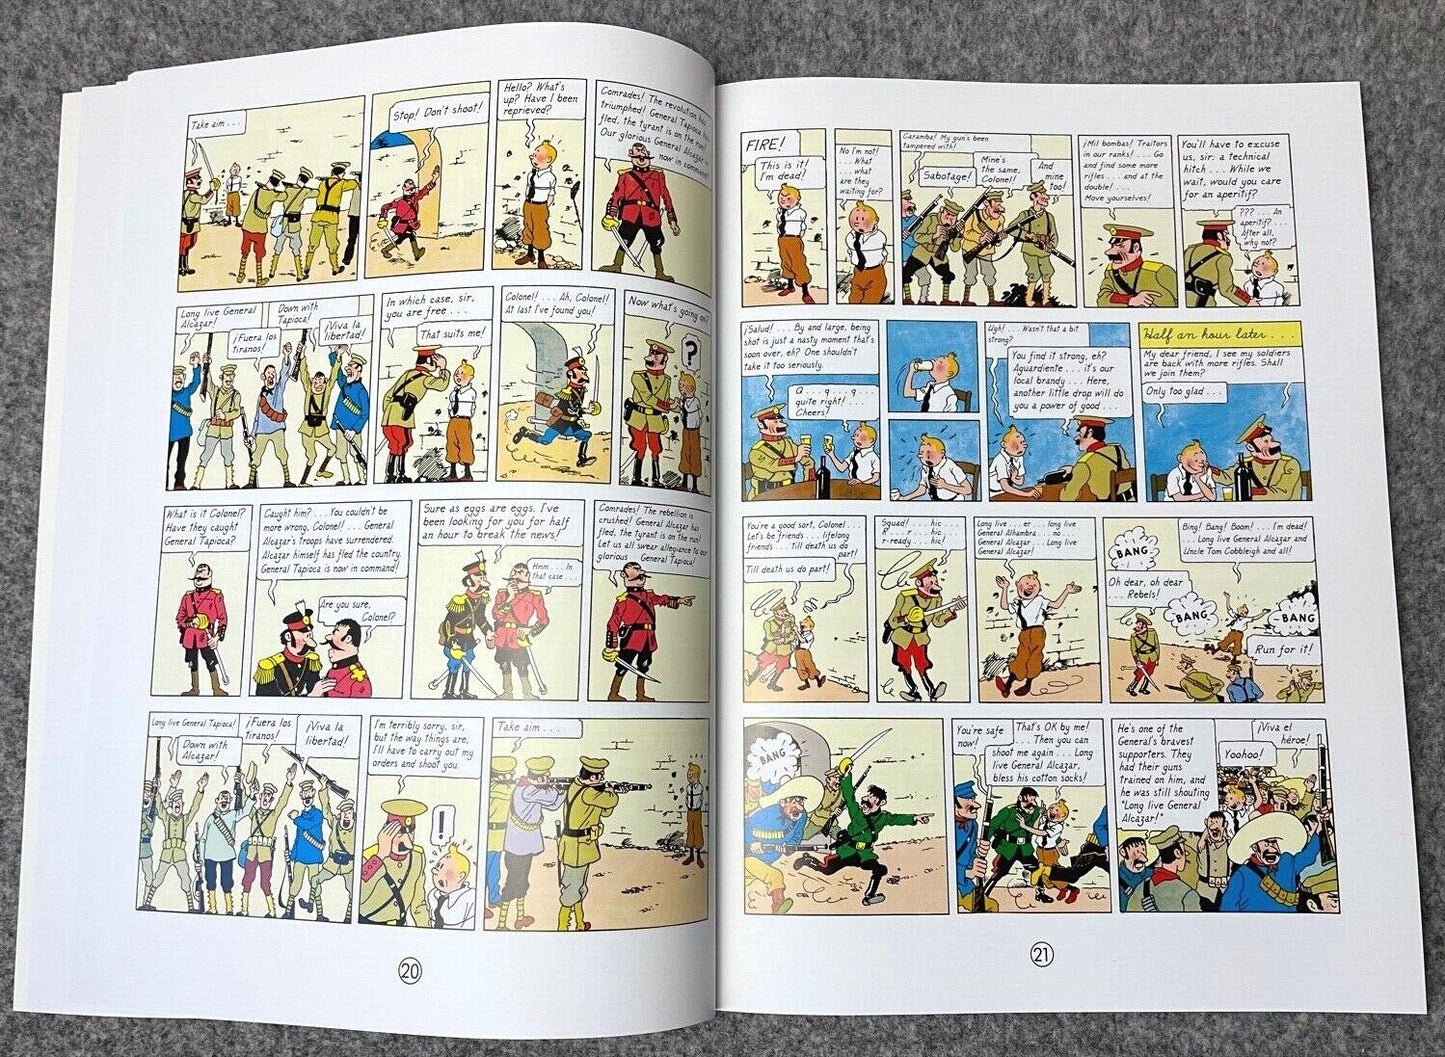 The Broken Ear - Tintin Farshore 2000s UK Edition Book Paperback Herge